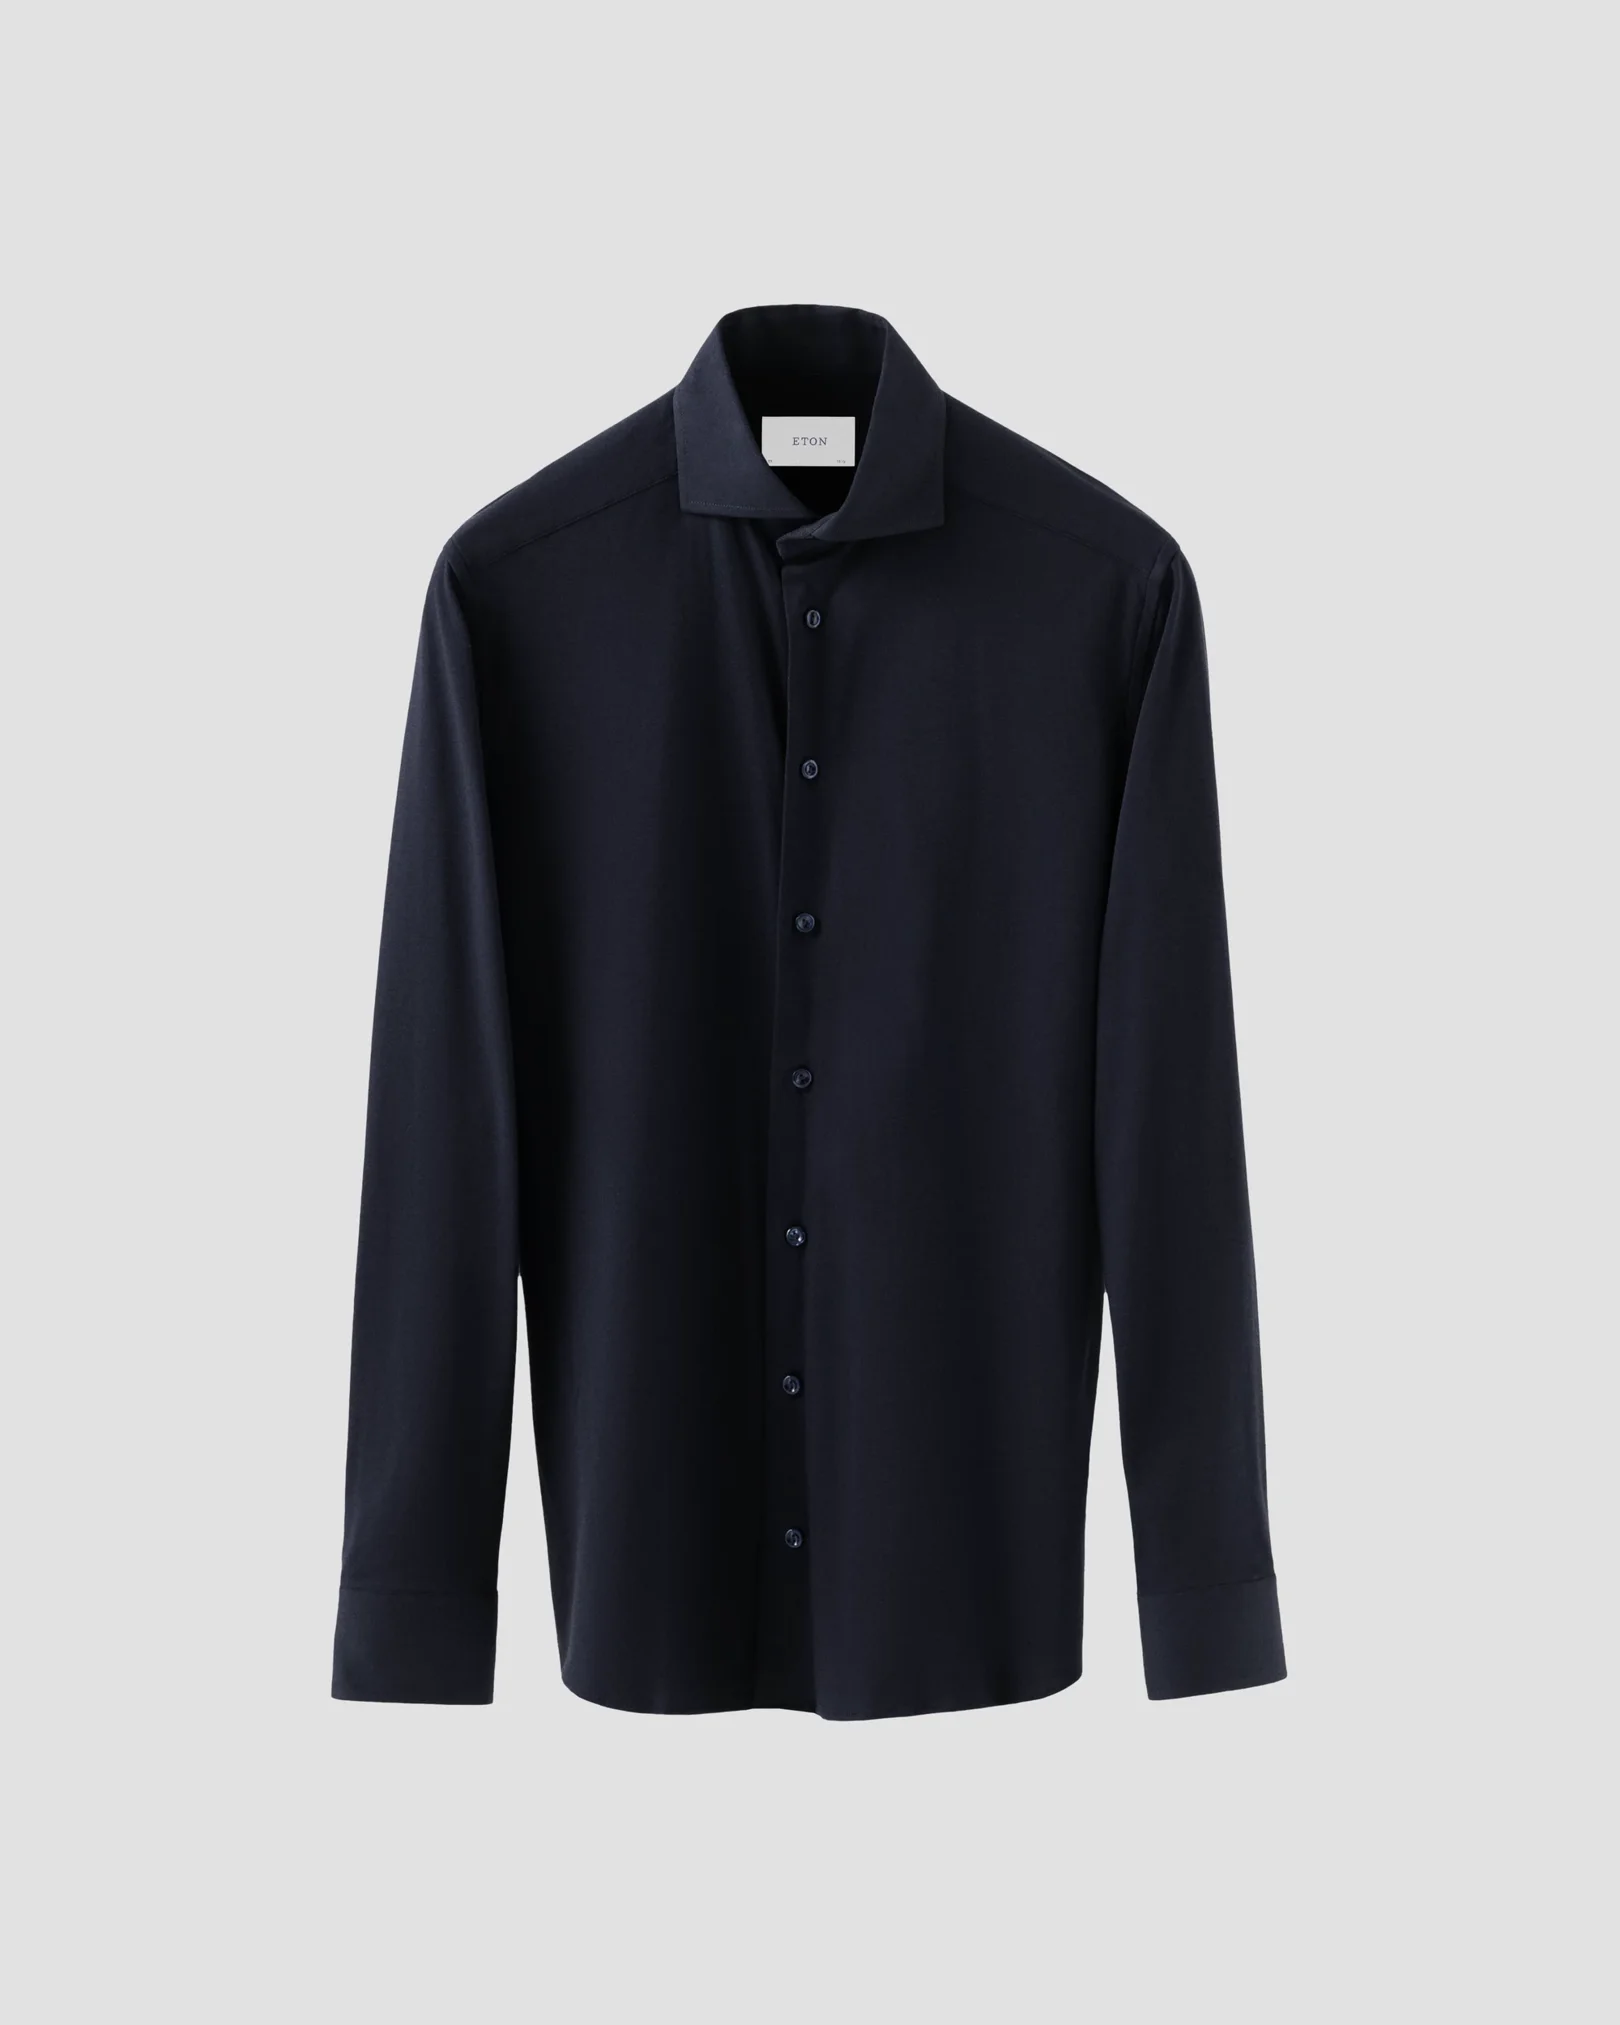 Eton - Navy blue Solid Cotton Four-Way Stretch Shirt